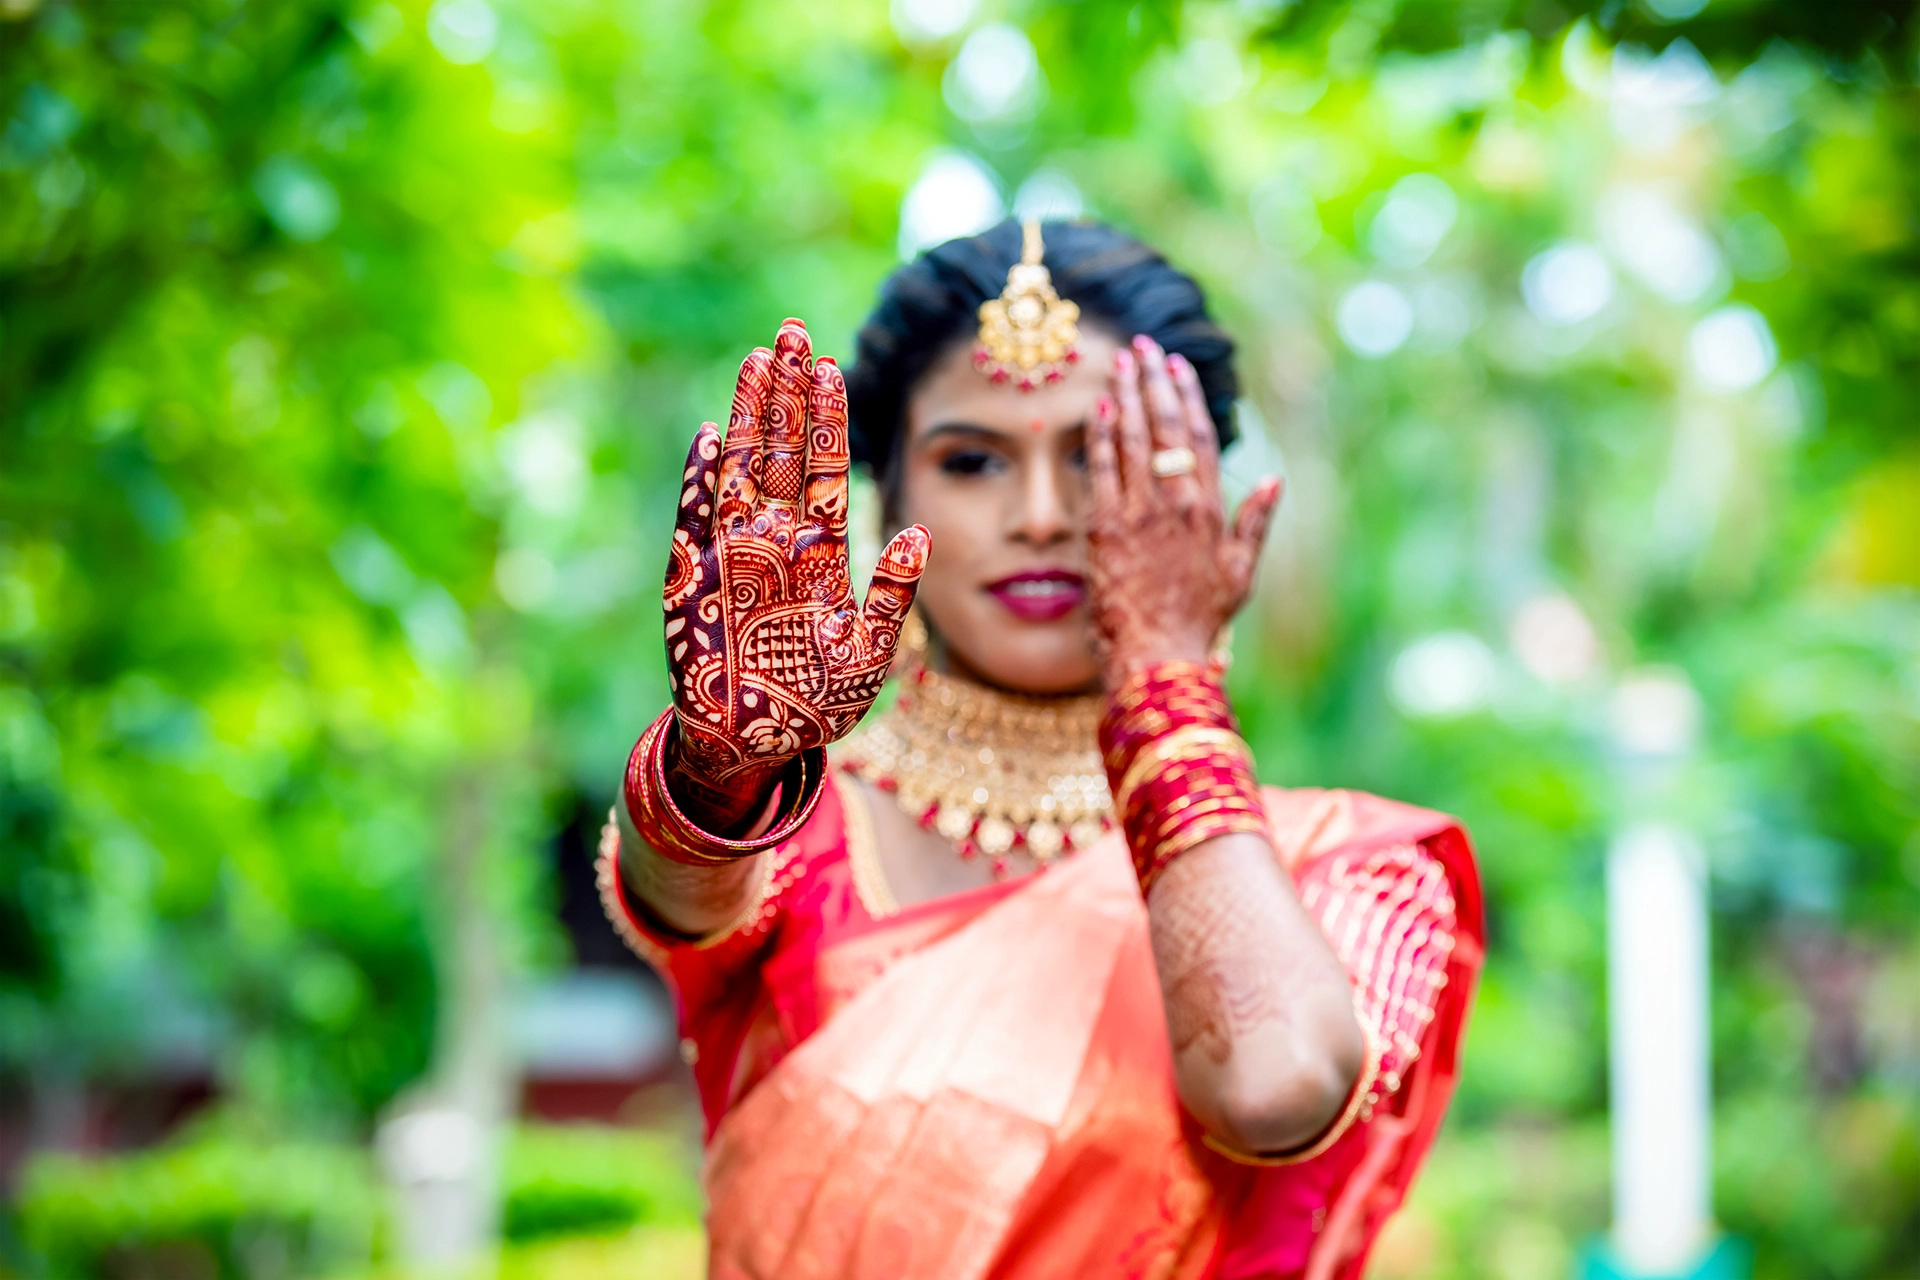 candid wedding photography in chennai